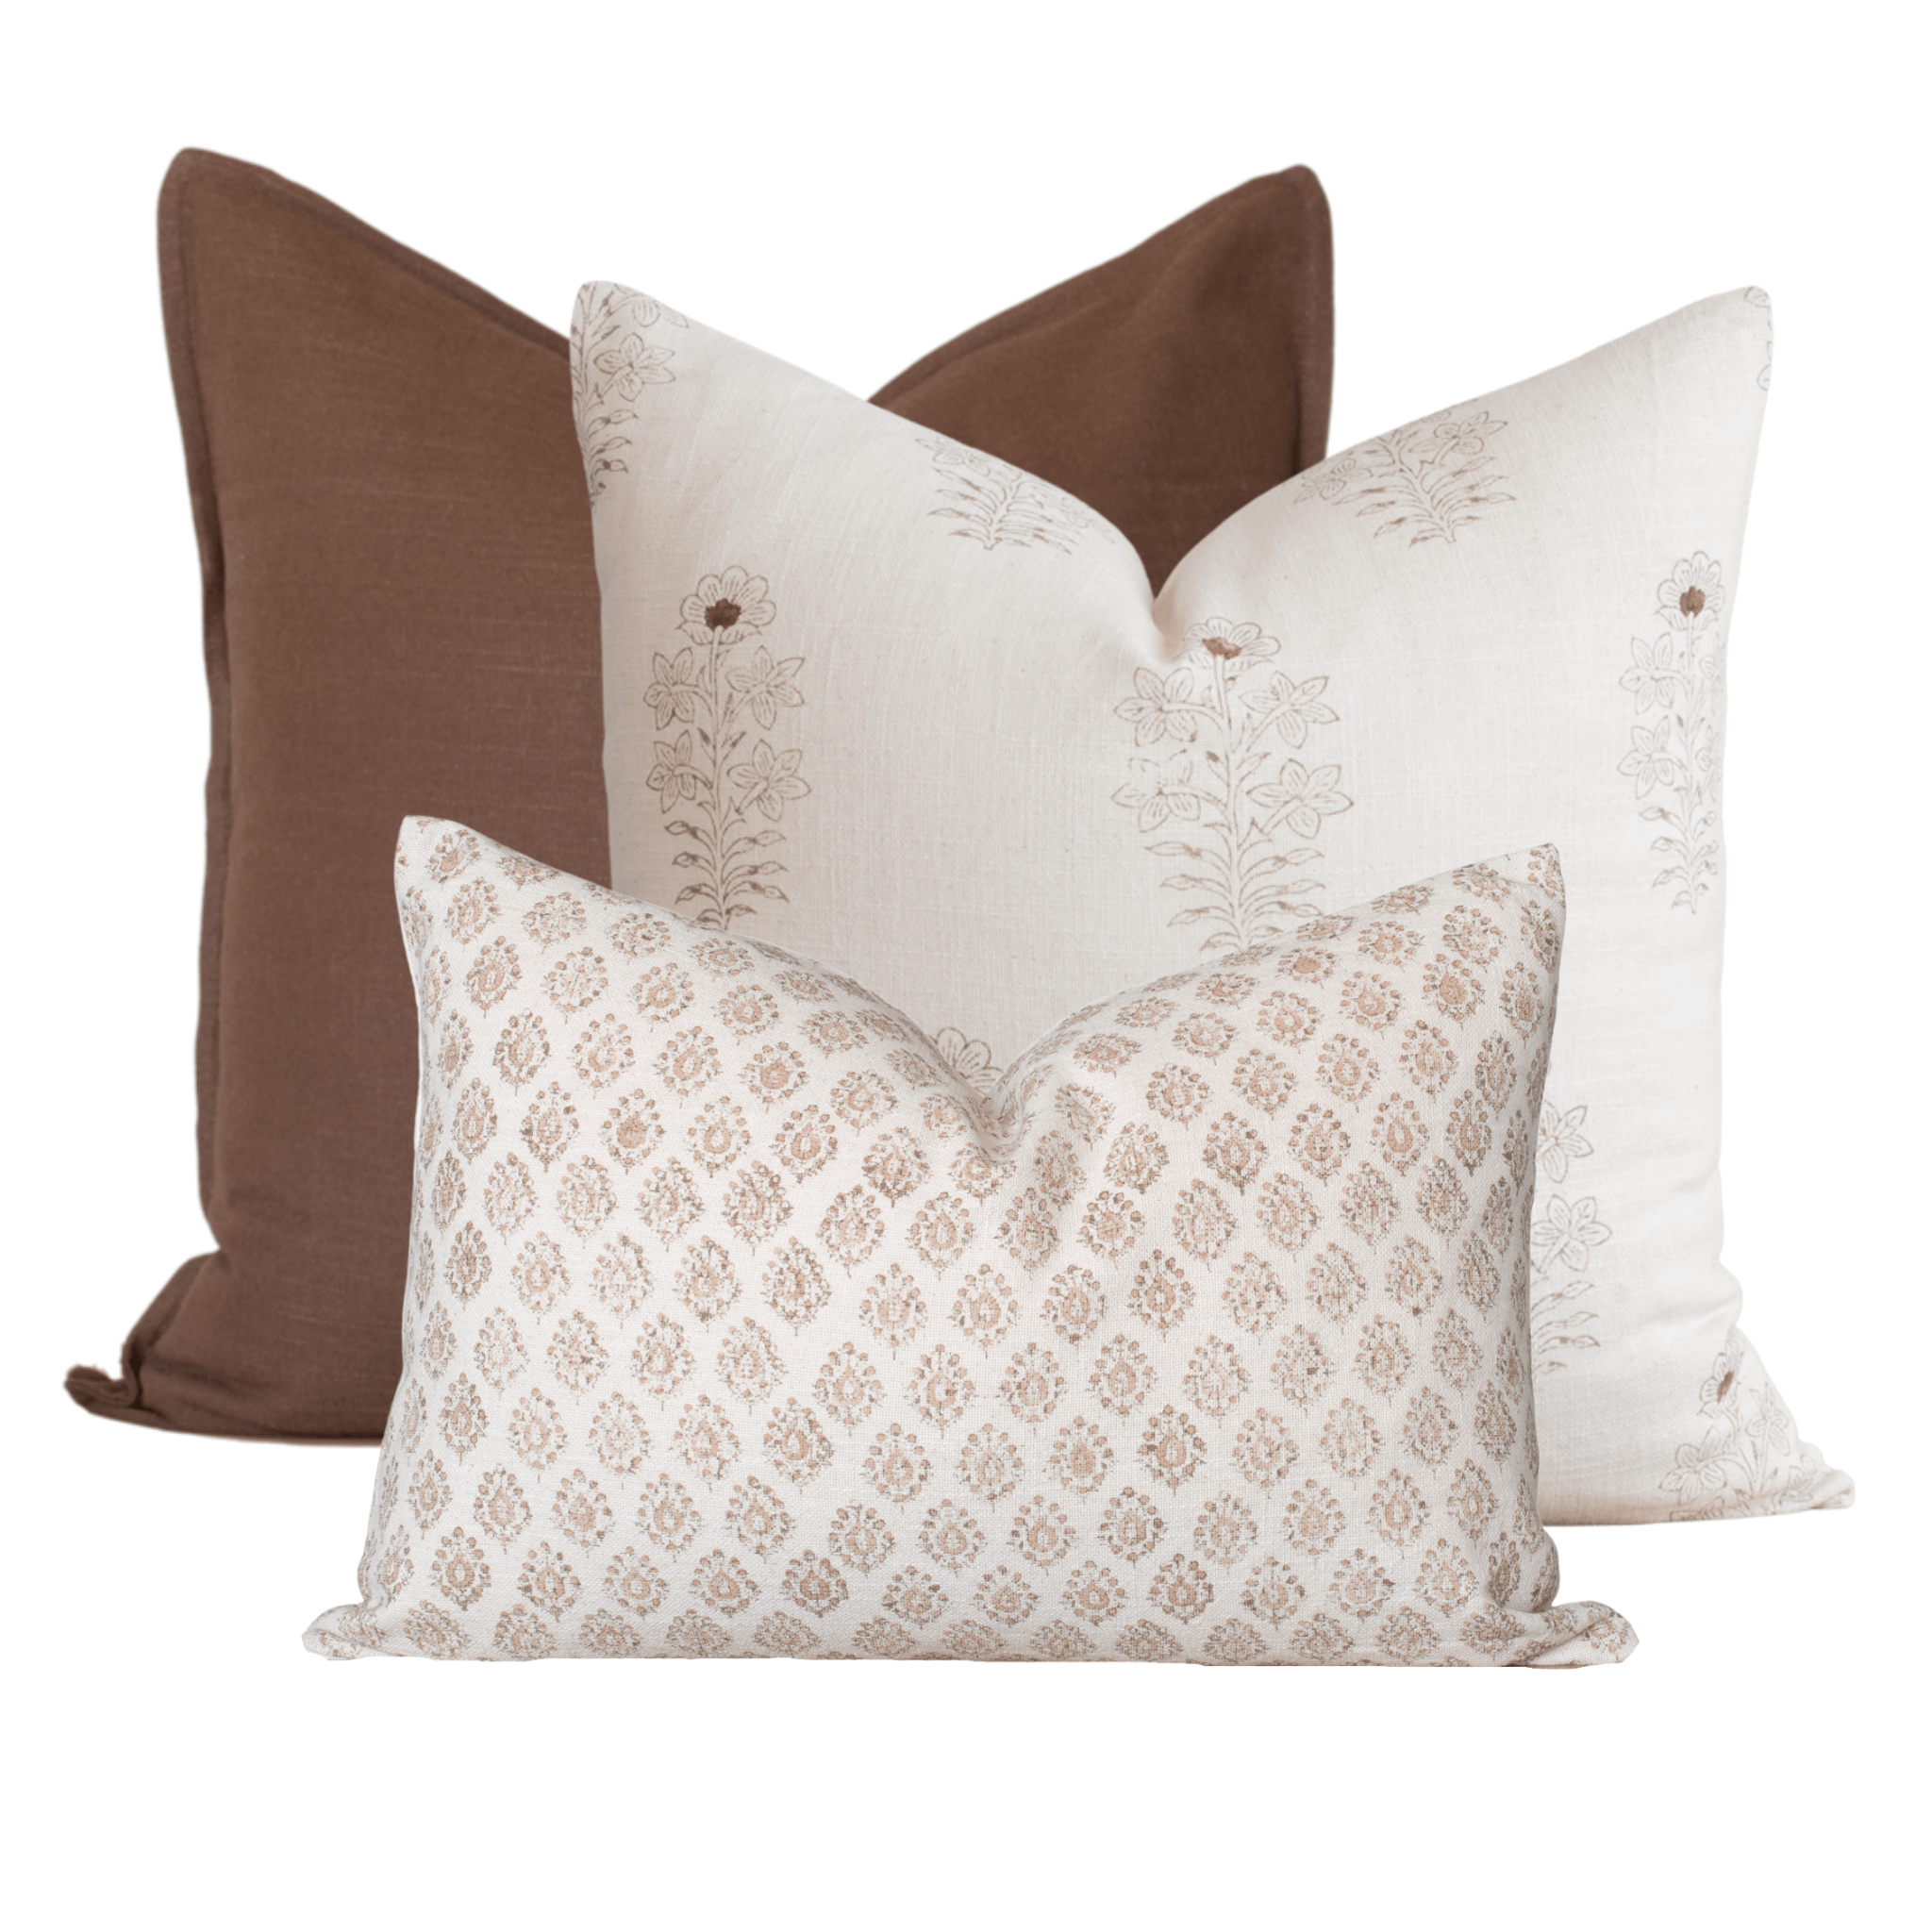 Clara Pillow Combination | Set of Three Pillow Covers